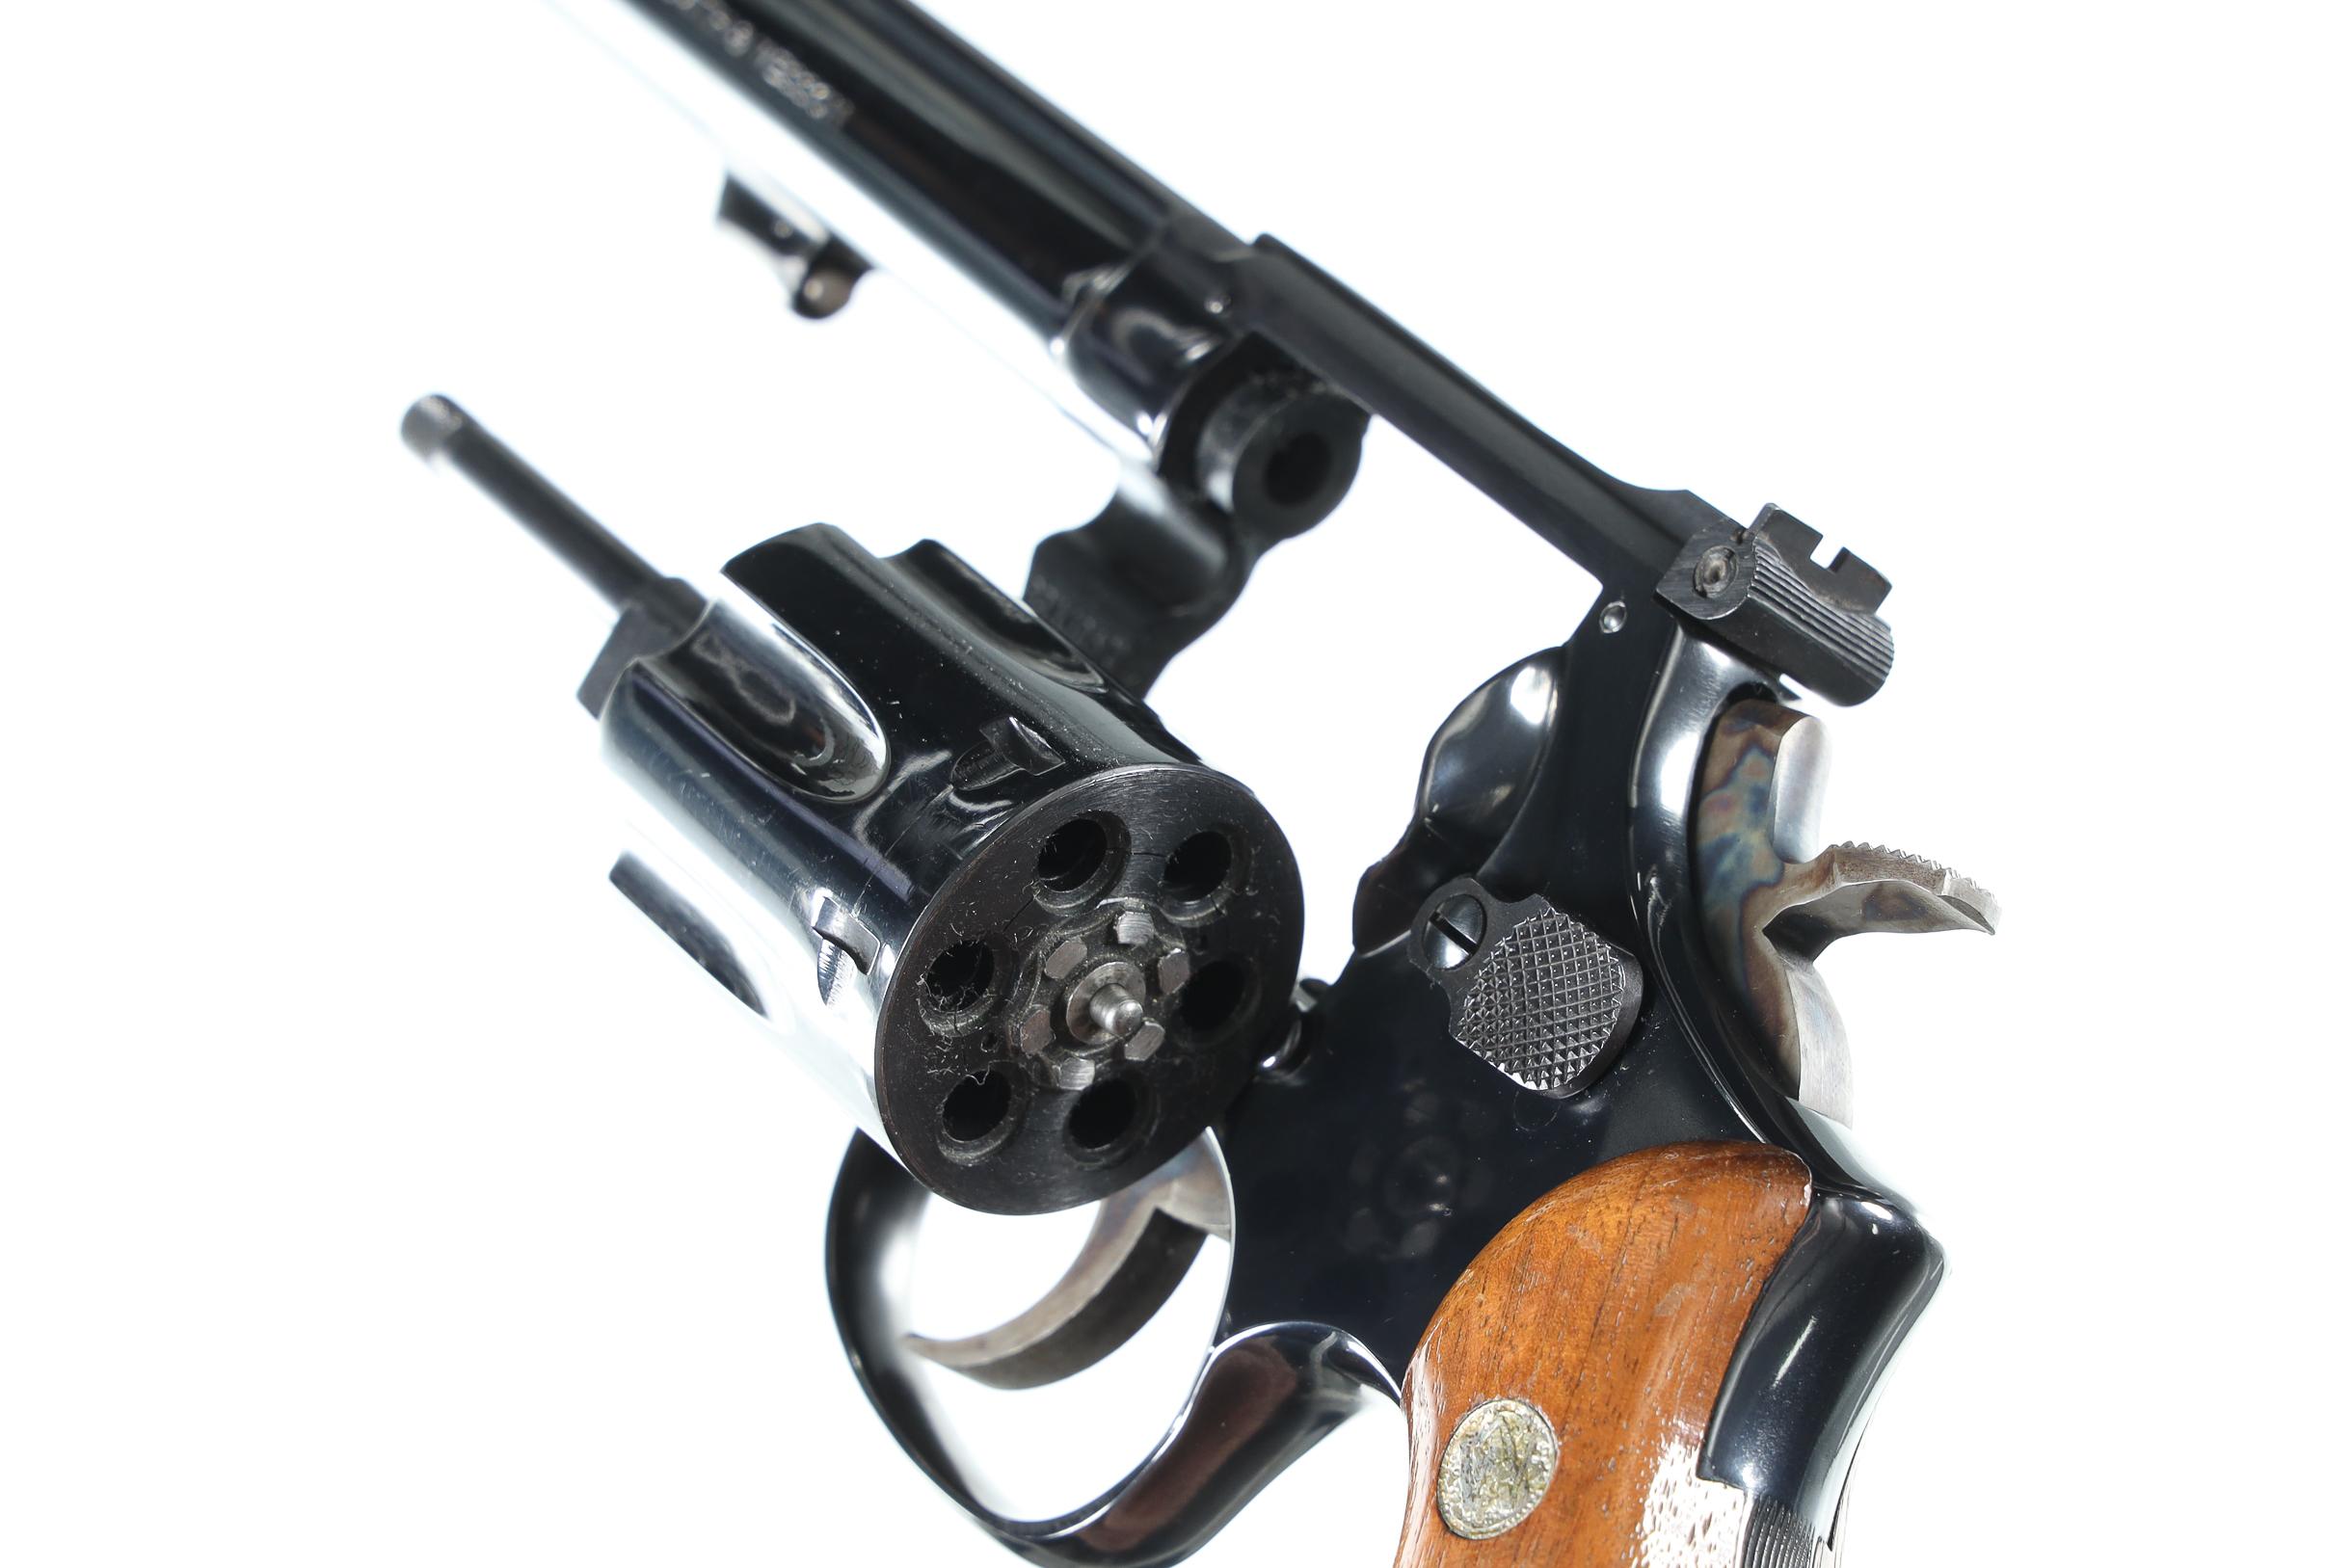 Smith & Wesson 17-4 Revolver .22 lr